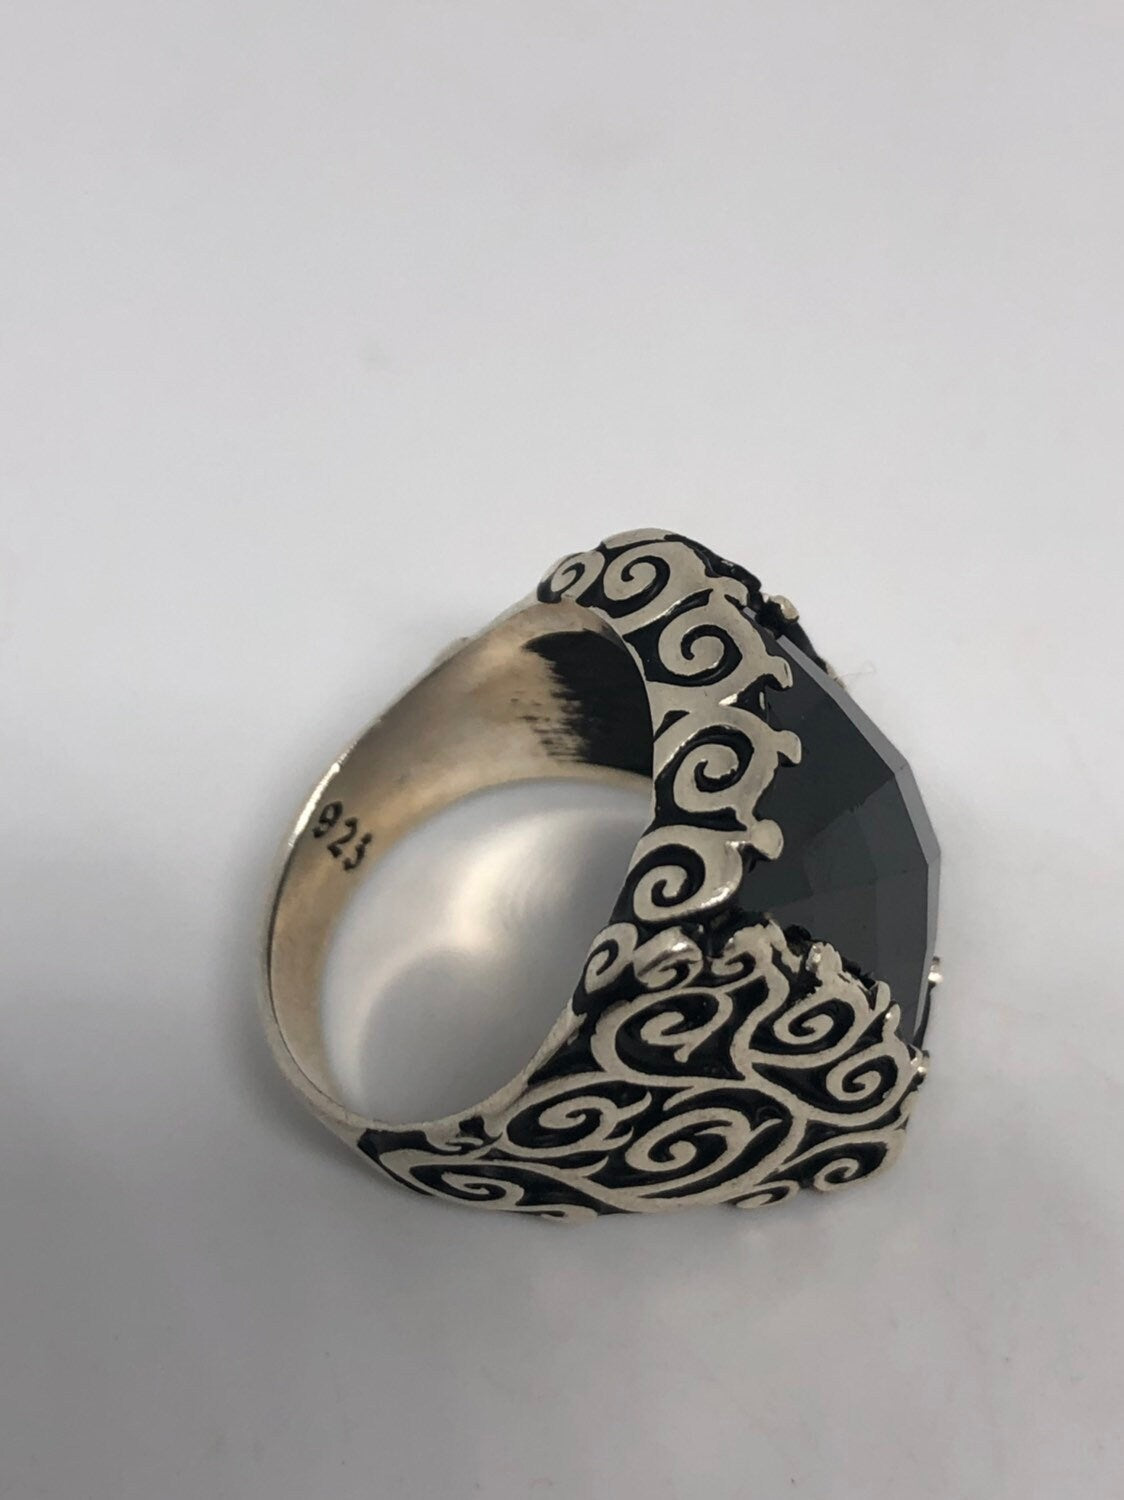 Vintage Gothic Sterling Silver Genuine Hemitite Mens Ring